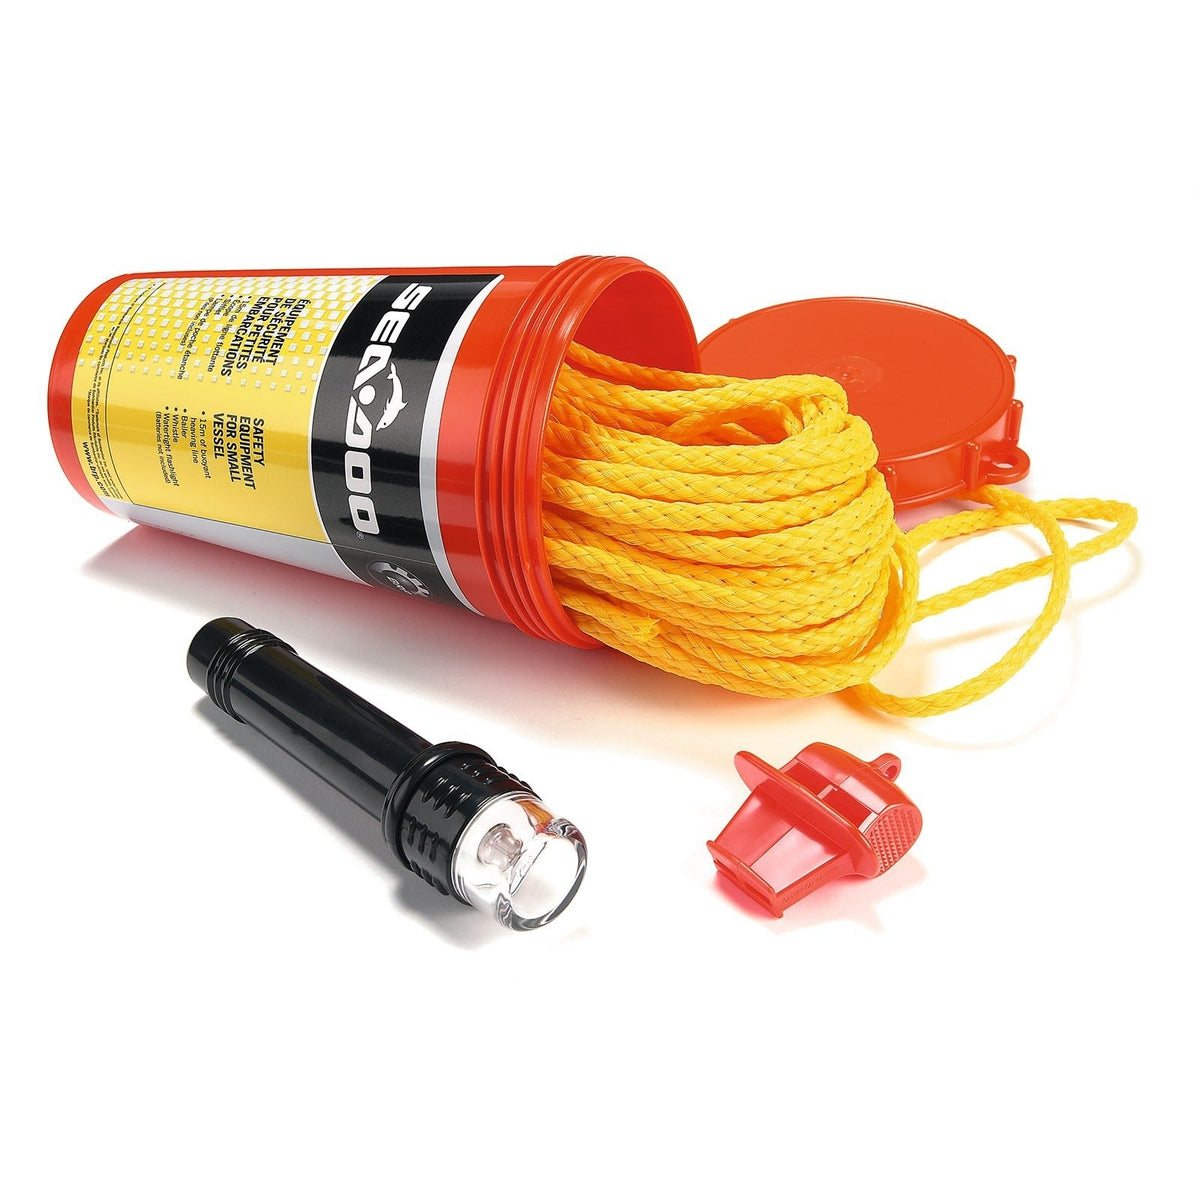 Sea-Doo Safety Equipment Kit